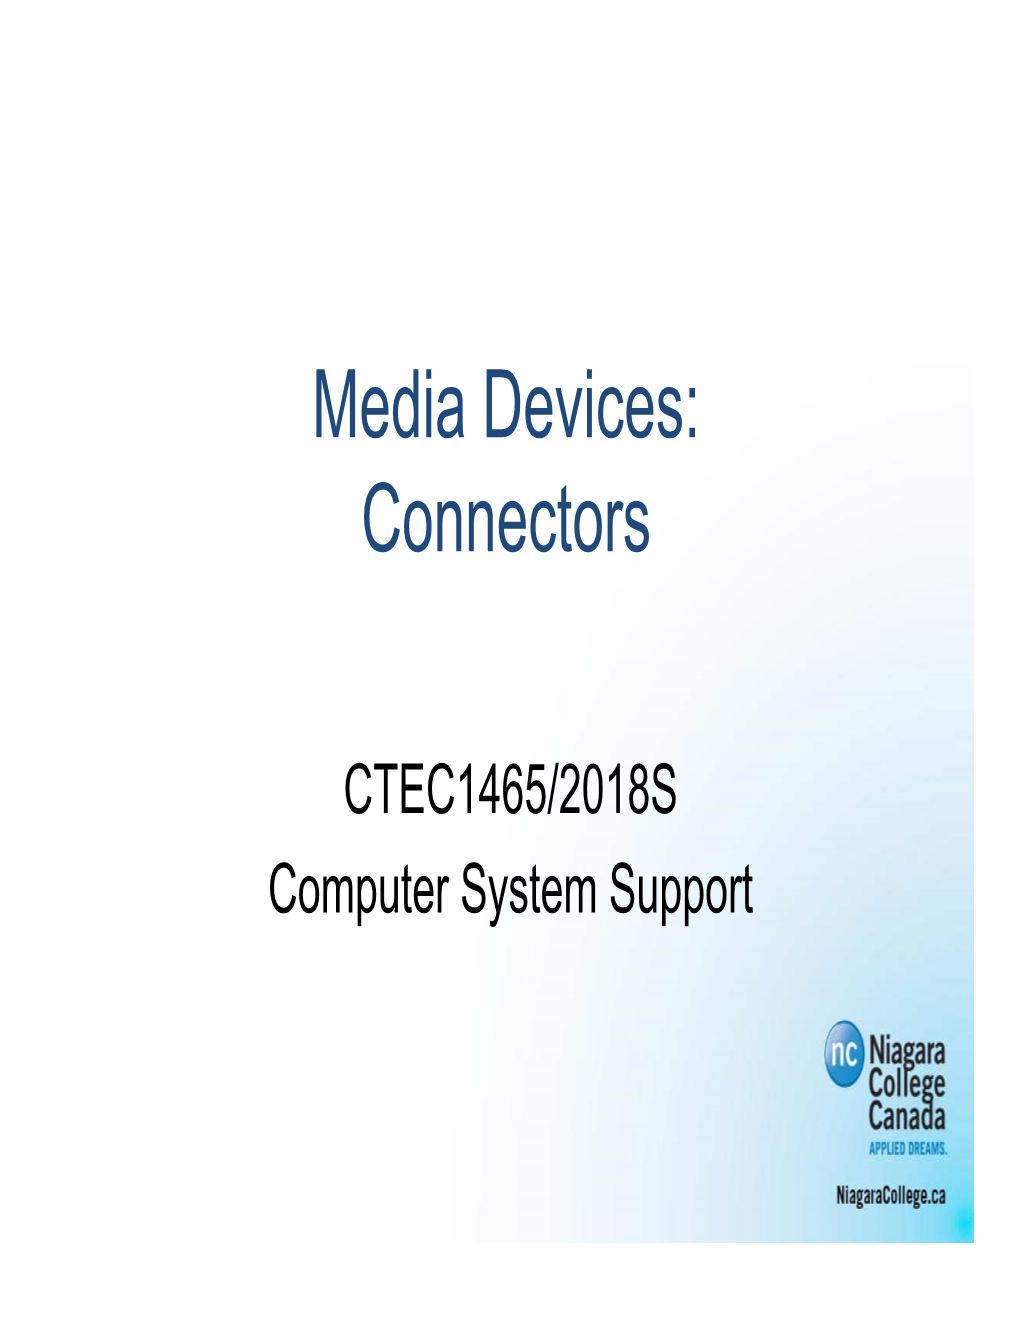 Media Devices: Connectors